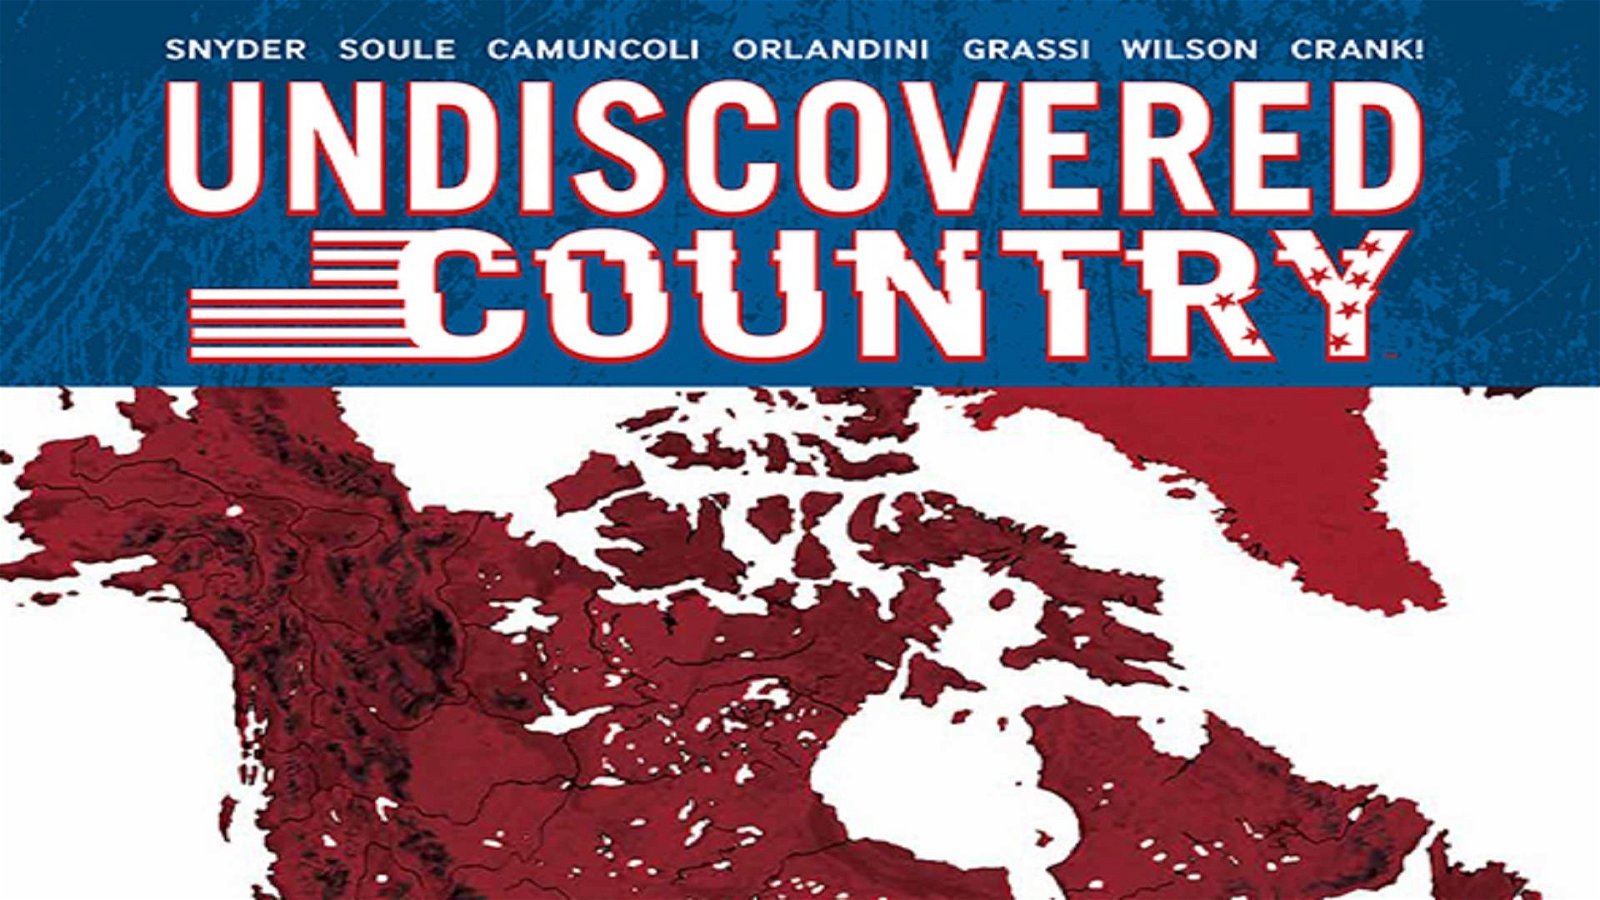 Immagine di saldaPress pubblicherà Undiscovered Country di Snyder, Soule &amp; Camuncoli